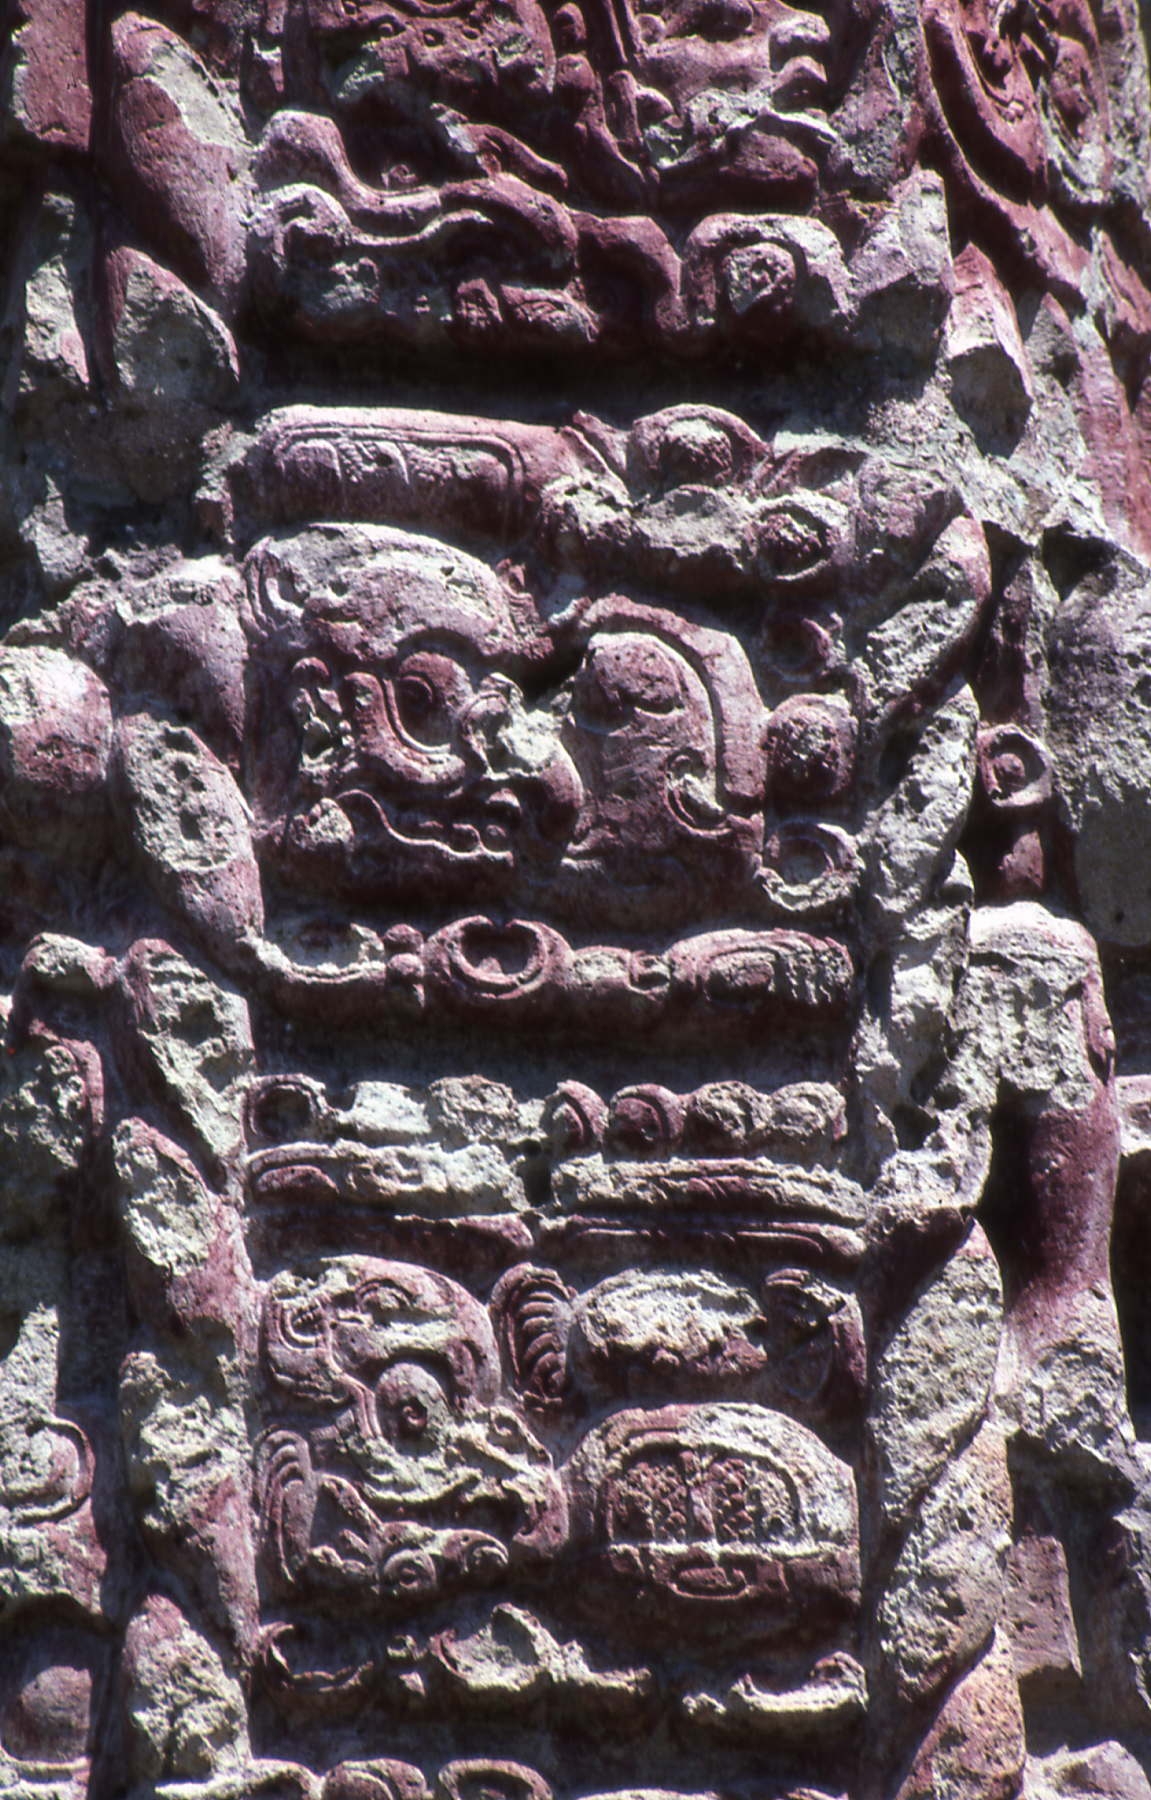 Part of stele